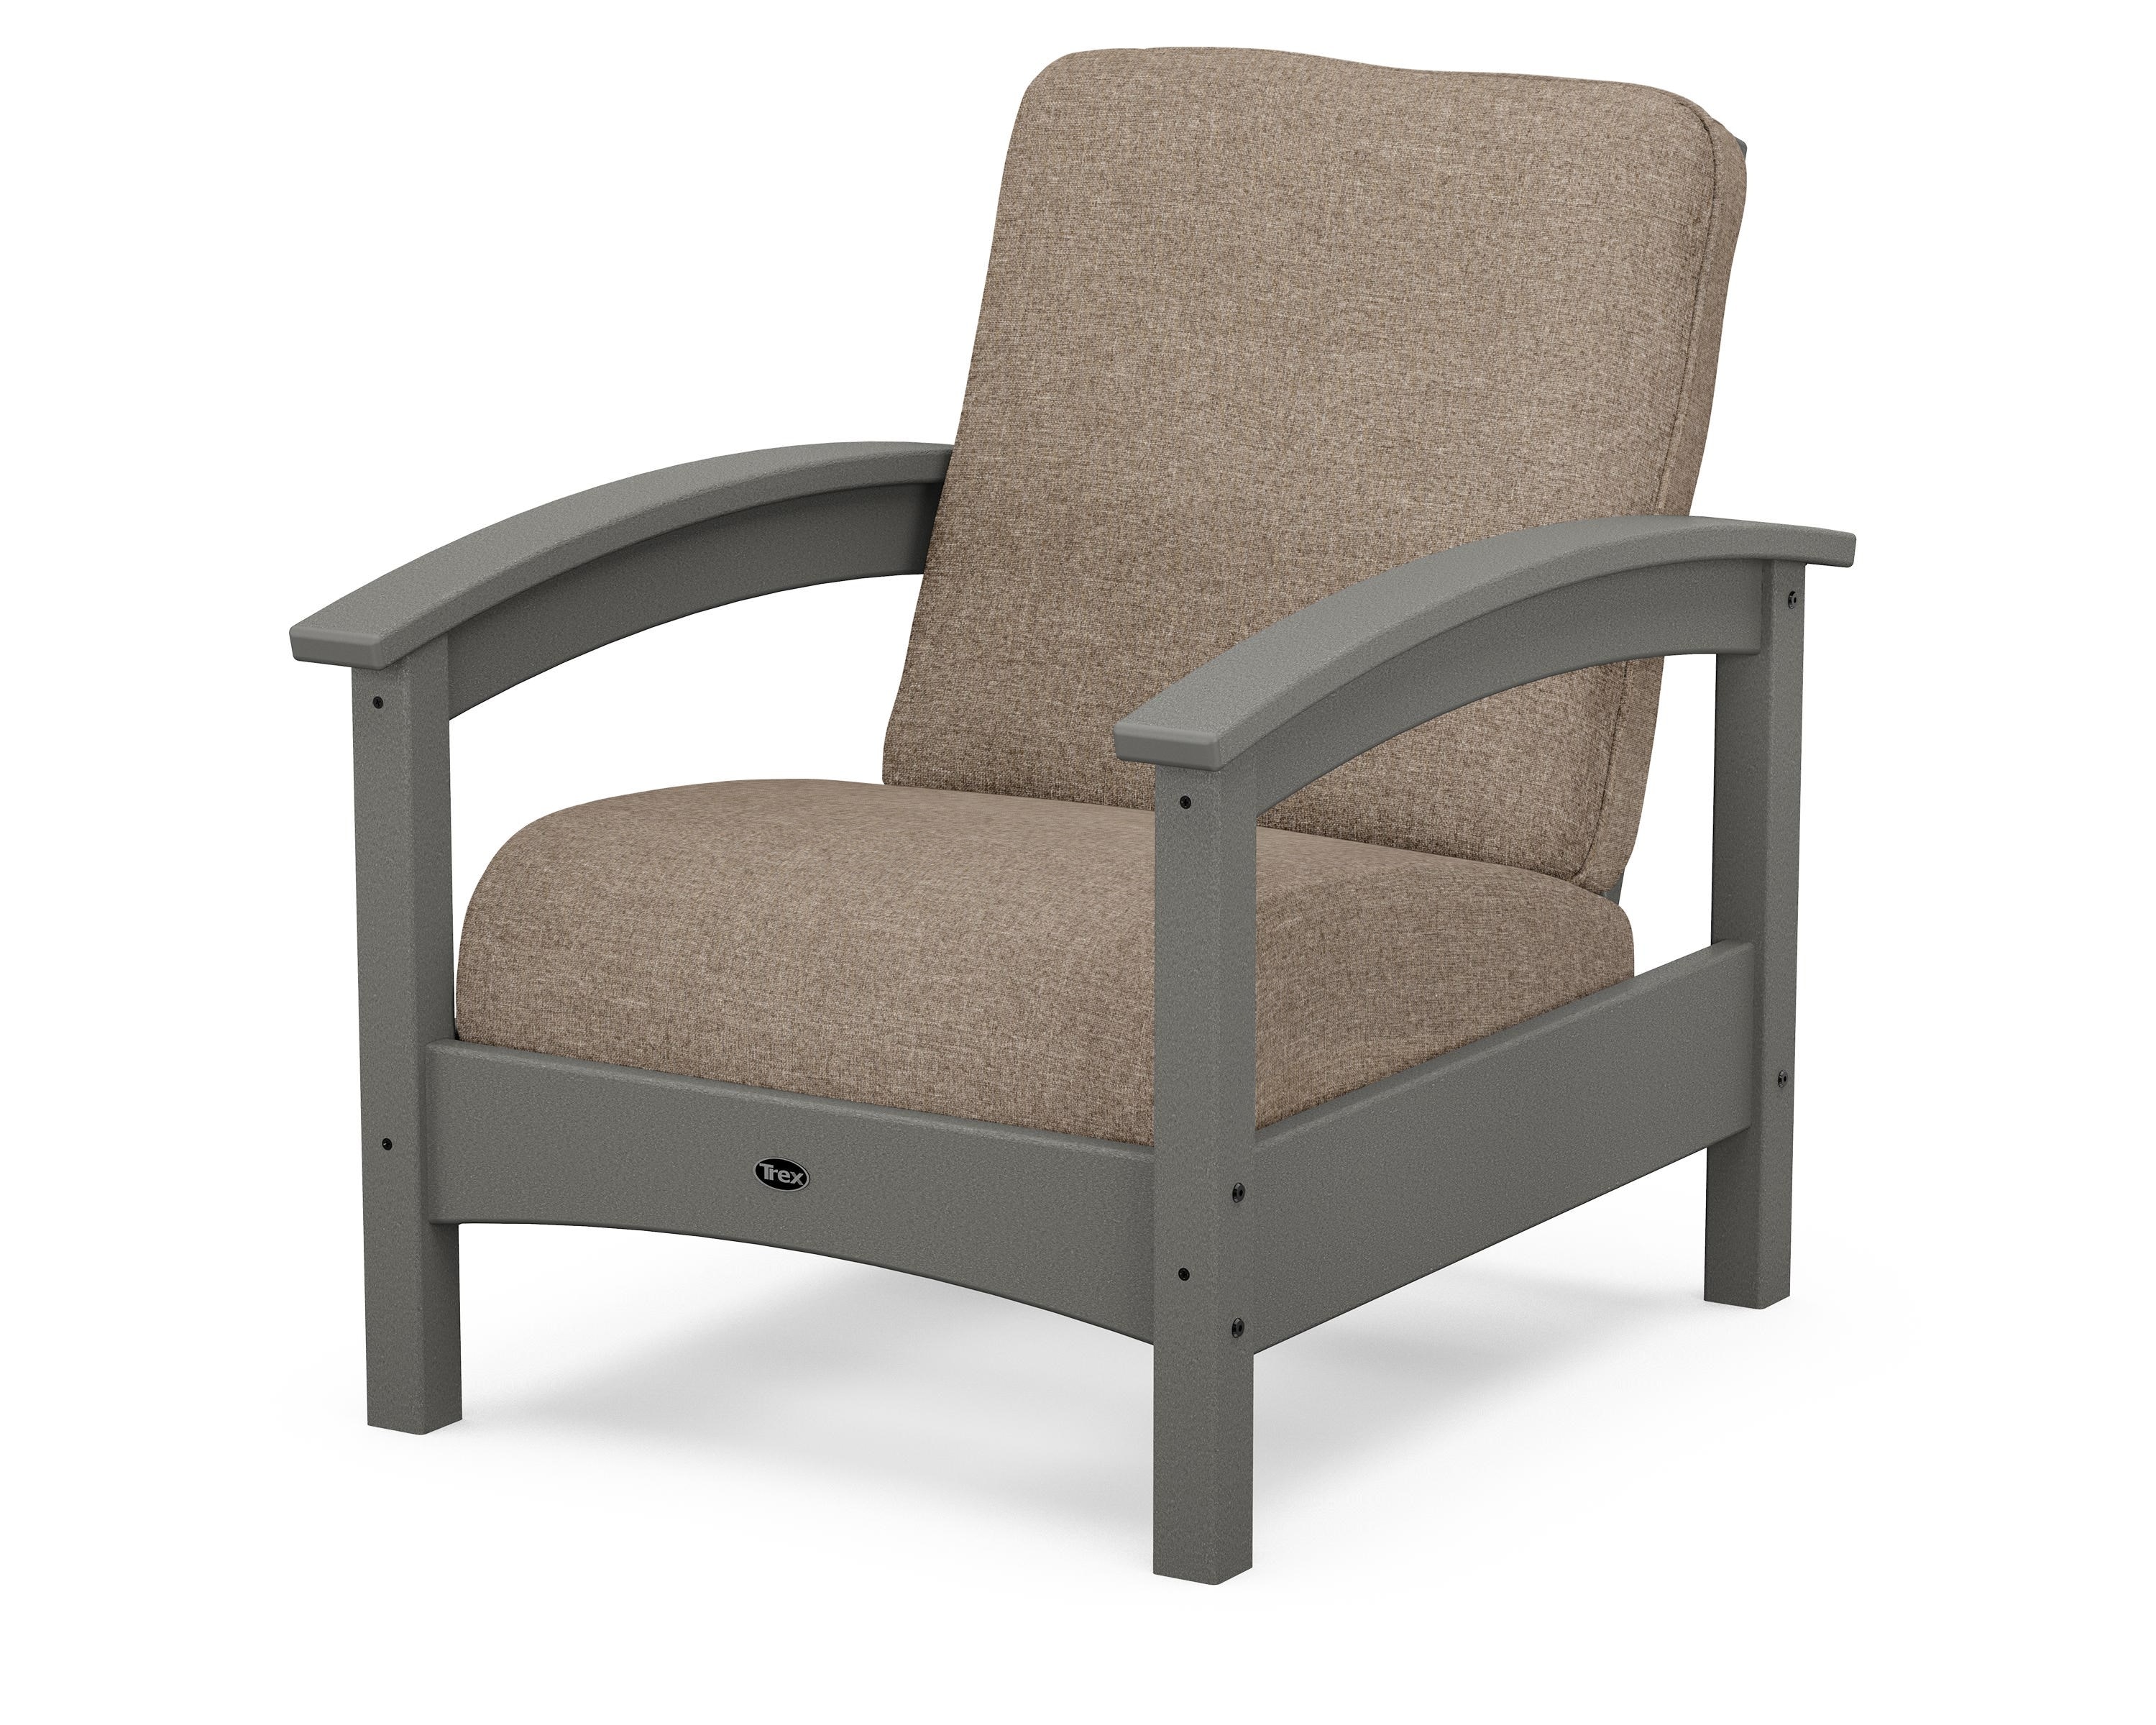 Trex Outdoor Furniture Rockport Club Chair